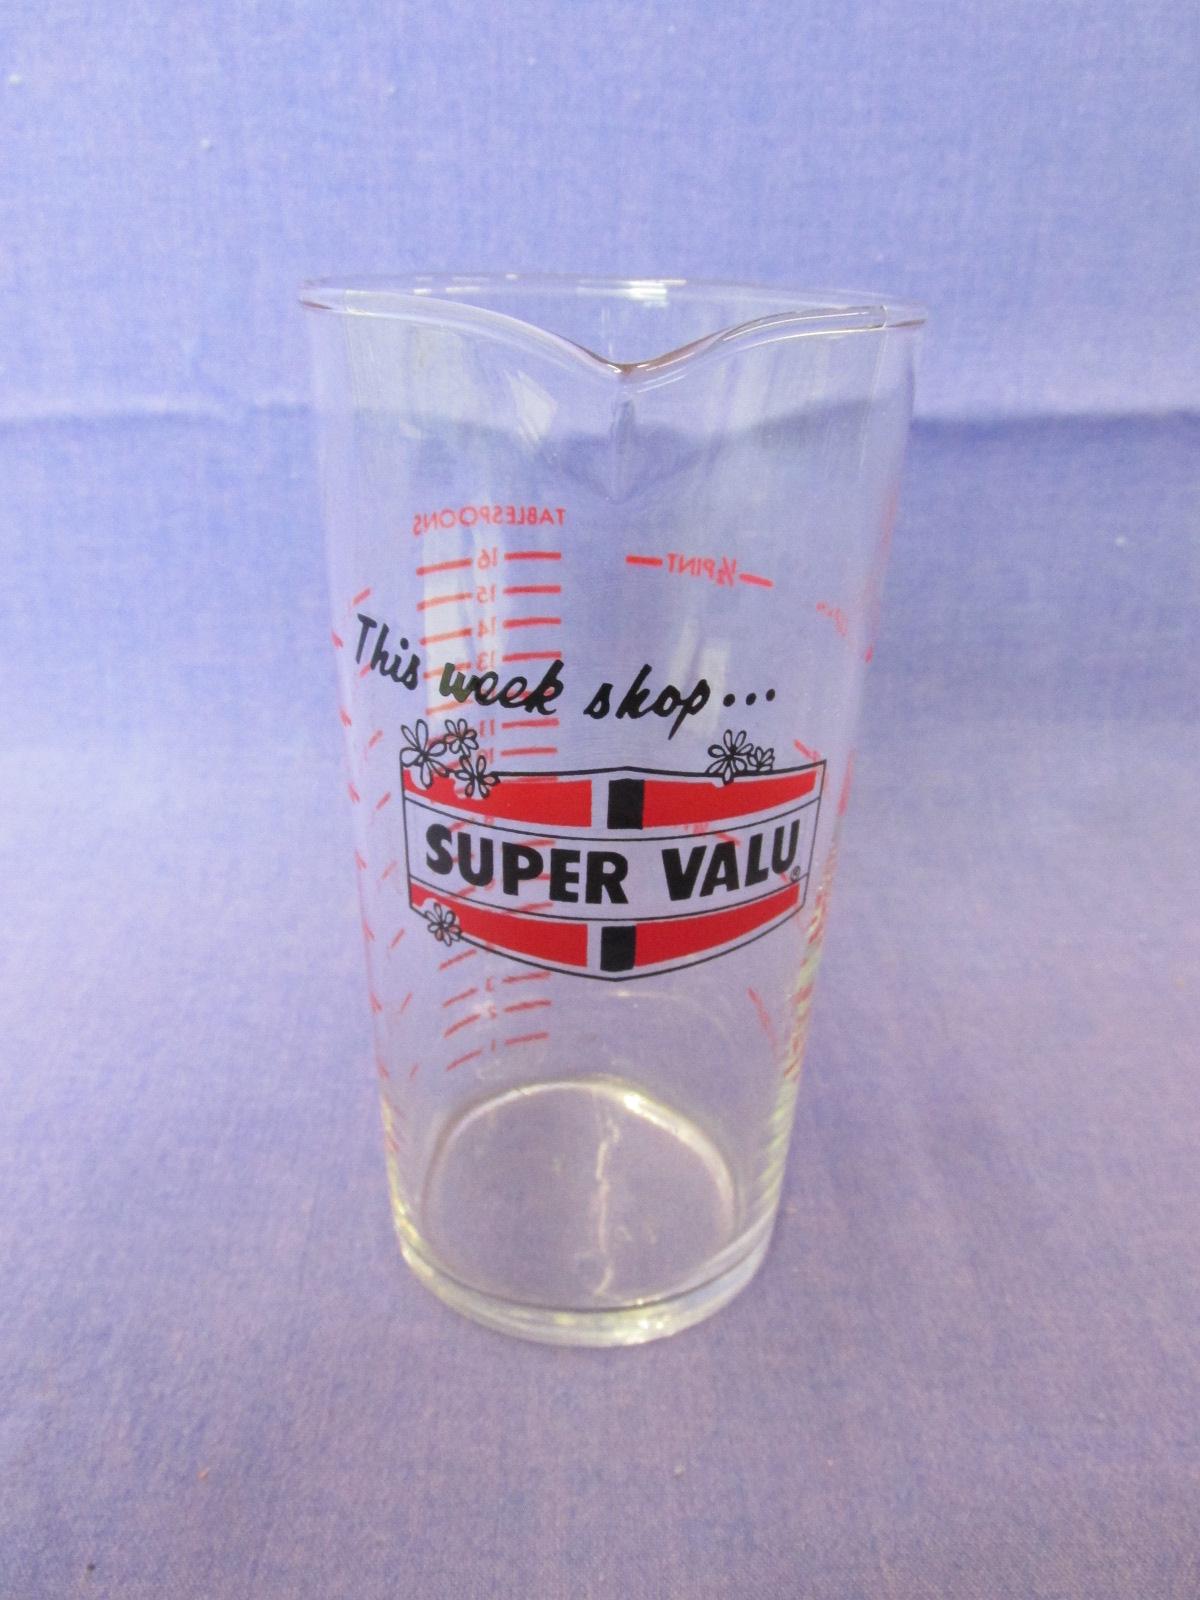 Vintage Measuring Tumbler “This week shop Super Valu”  5 1/4” tall – Holds 1 cup